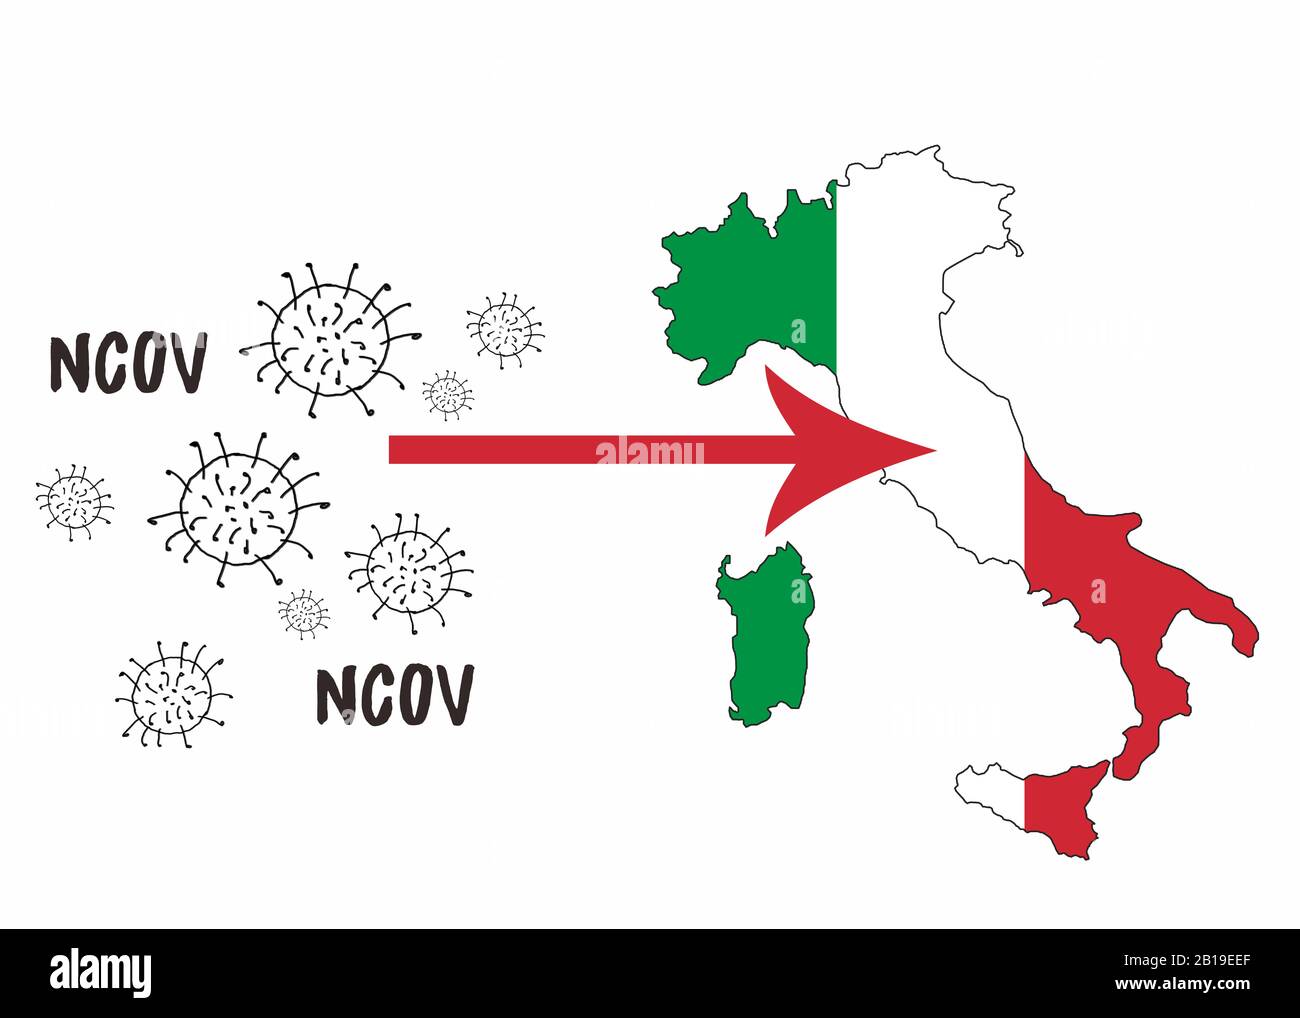 Coronavirus goes to Italy danger in Italy Stock Photo